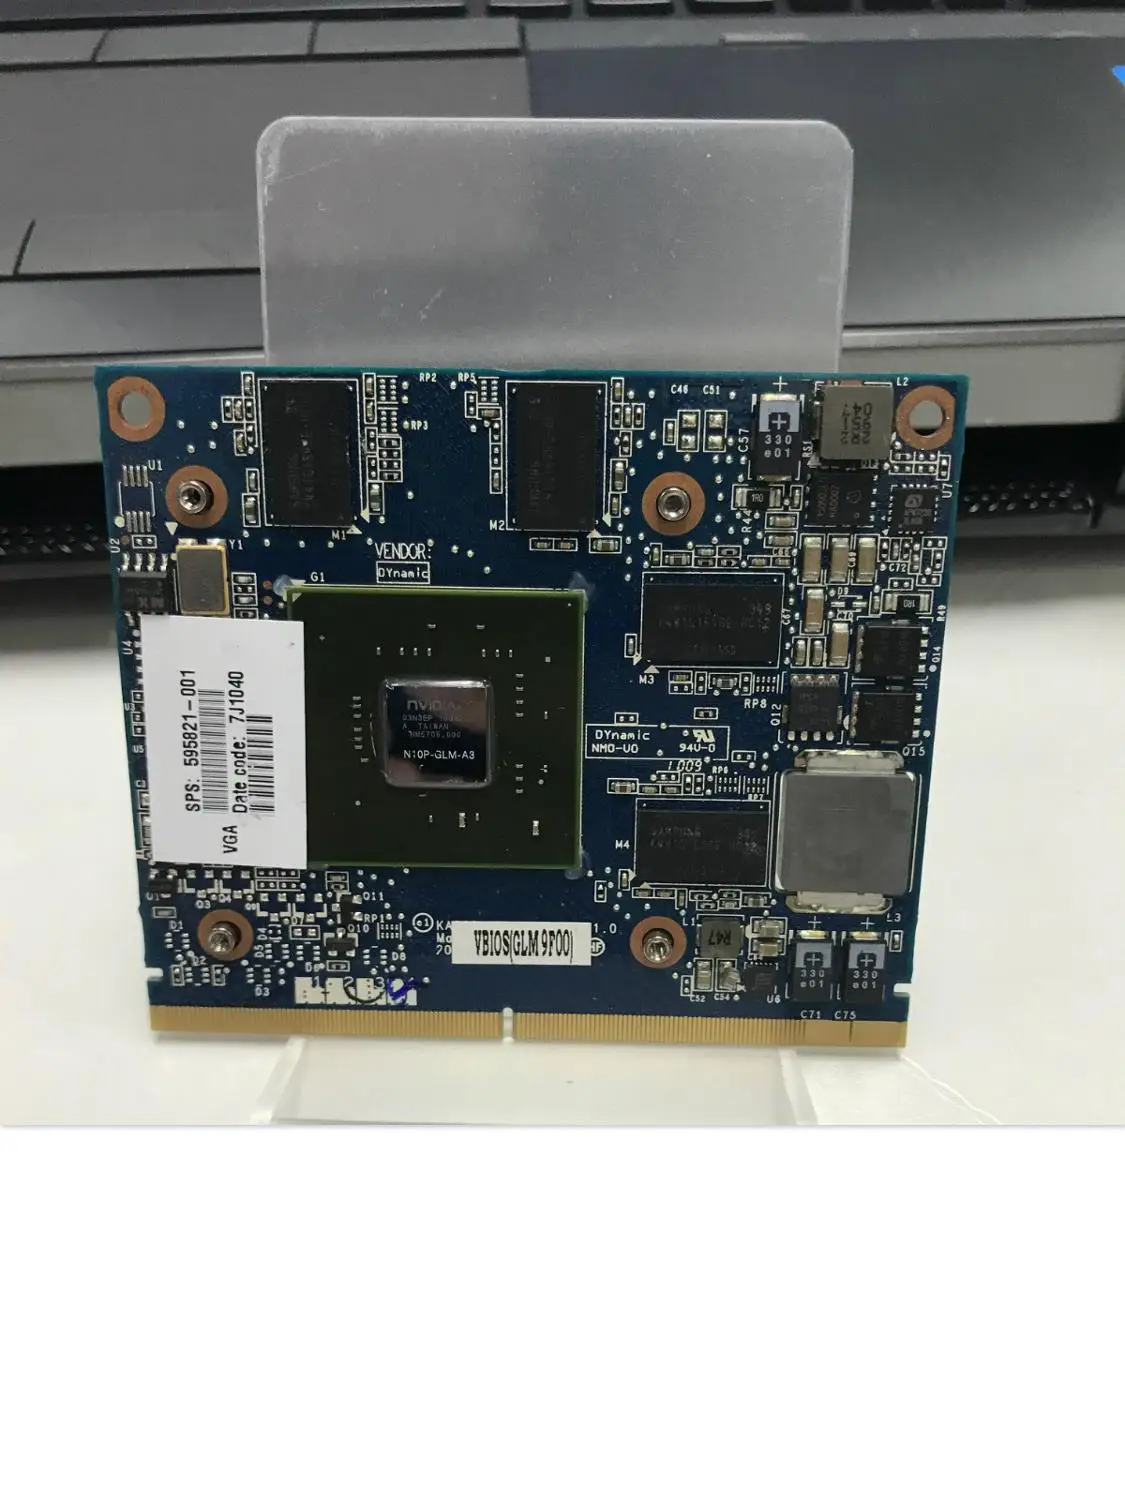 

LS-4951P N10P-GLM-A3 595821-001 595820-001 Quadro fx880m FX 880M DDR3 1GB VGA Video Card for EliteBook 8540P 8540W